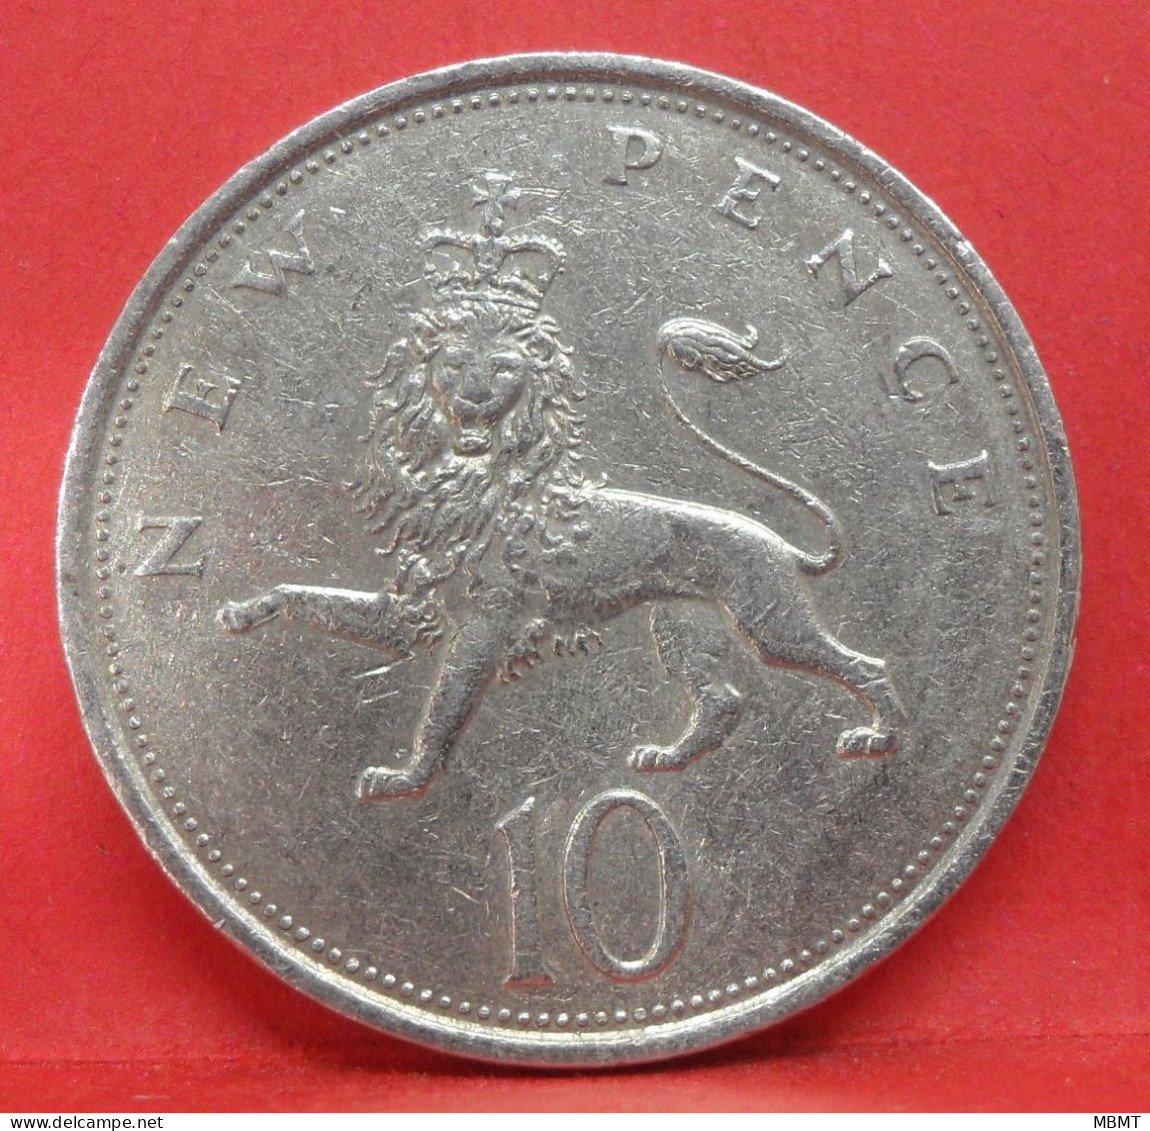 10 Pence 1977 - TB - Pièce Monnaie Grande-Bretagne - Article N°2824 - 10 Pence & 10 New Pence